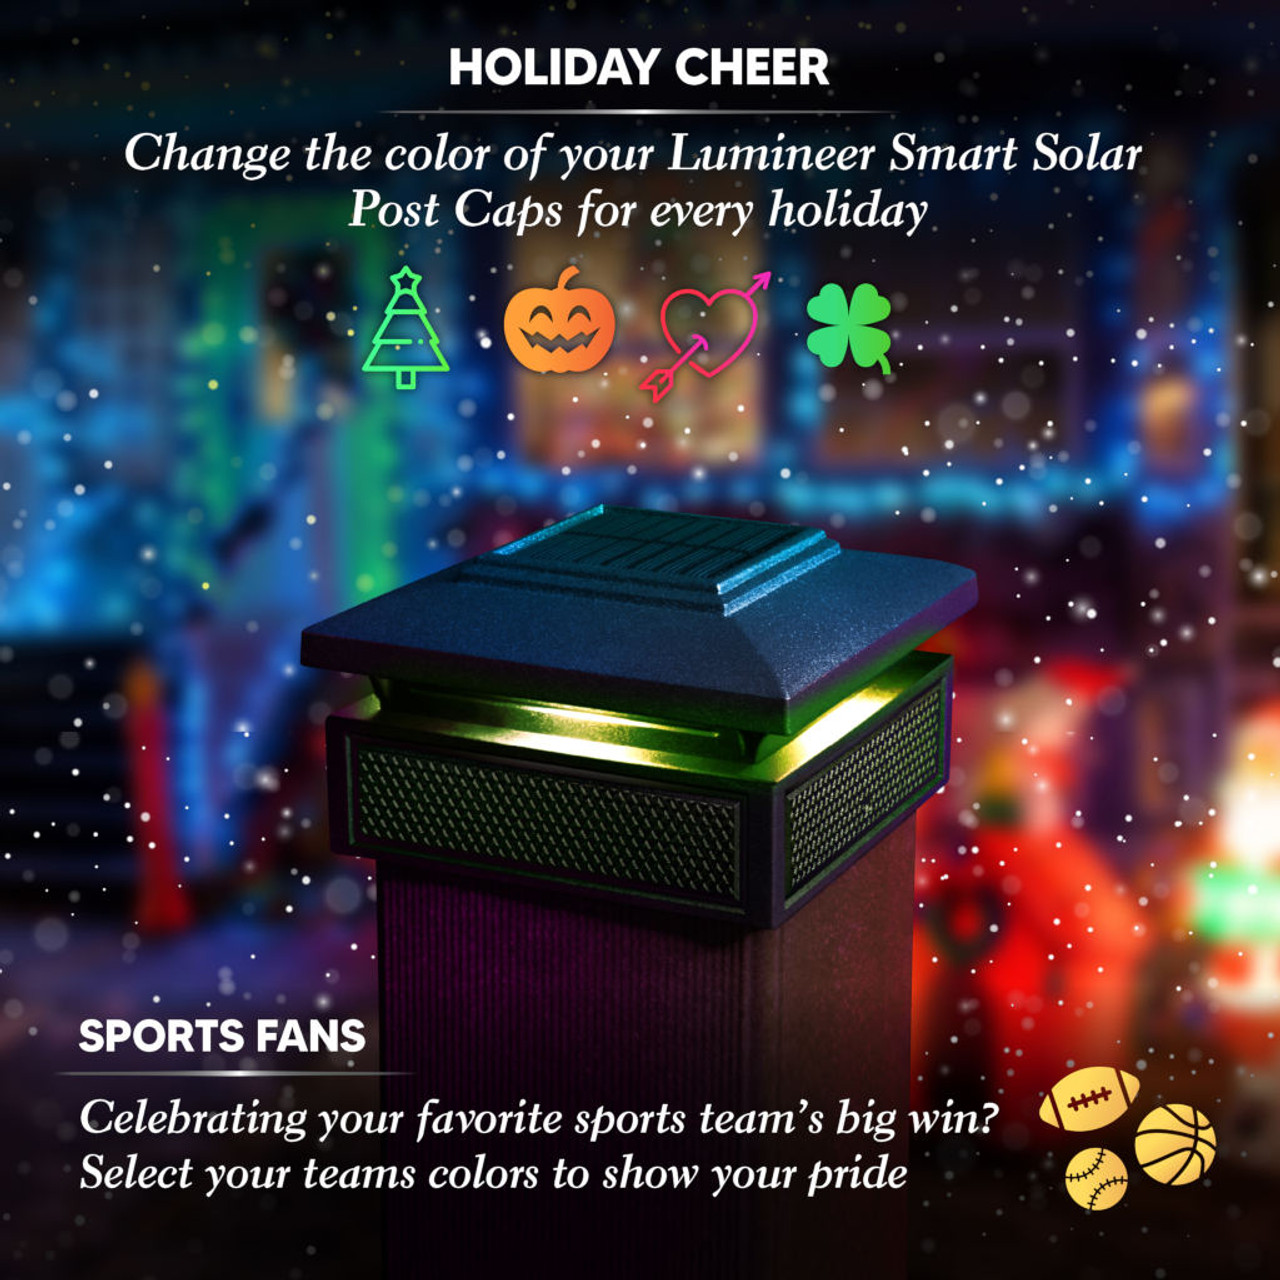 Lumineer Smart Solar Post Cap Holiday Colors